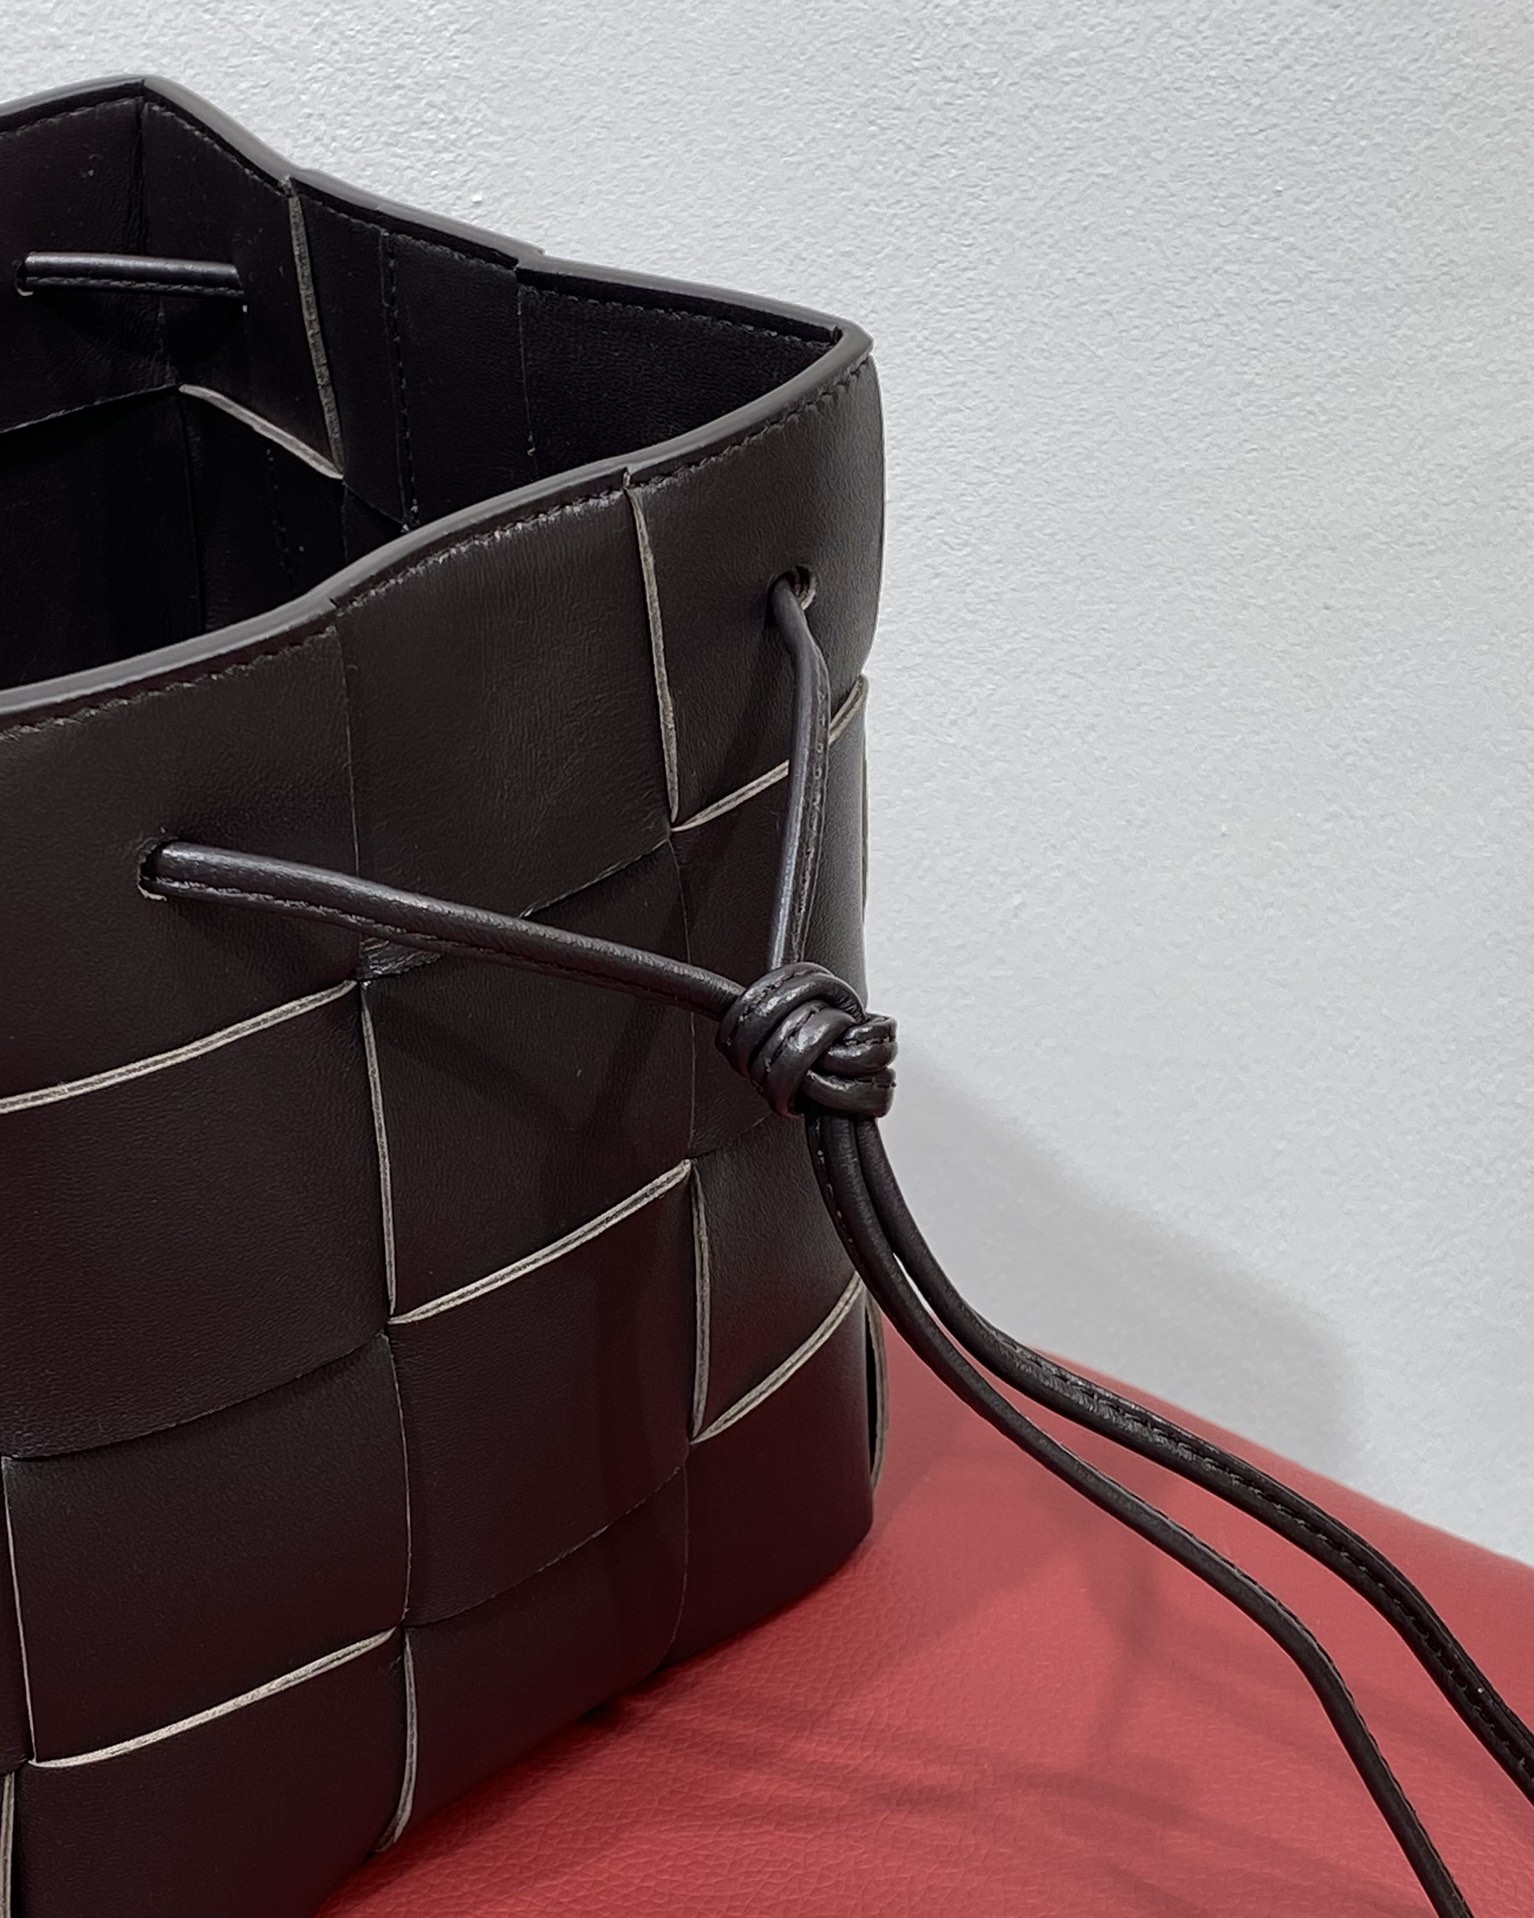 Bv 新款Cassette 水桶包 大号 啡色 18cm 经典的编织元素 抽绳水桶包